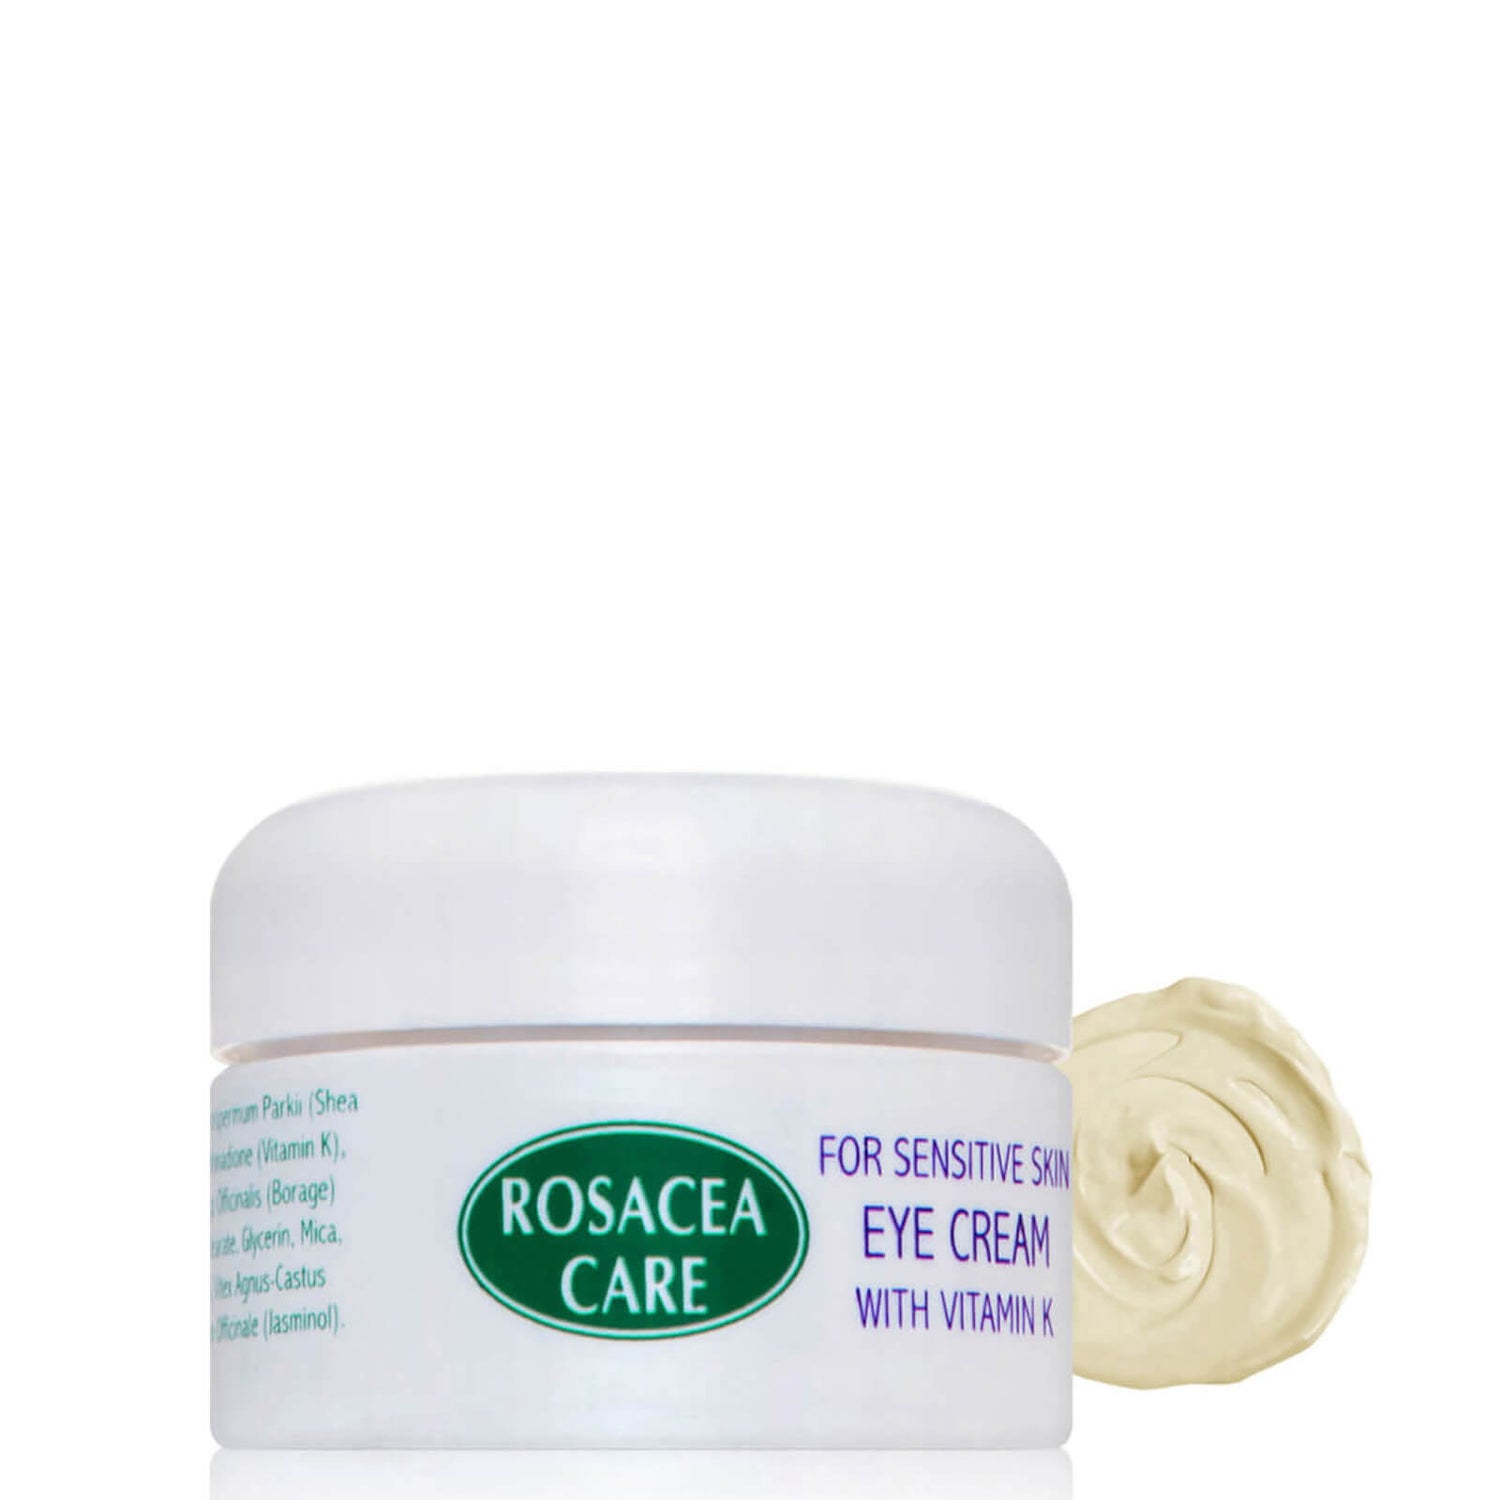 Rosacea Care Eye Cream With Vitamin K (0.5 oz.)